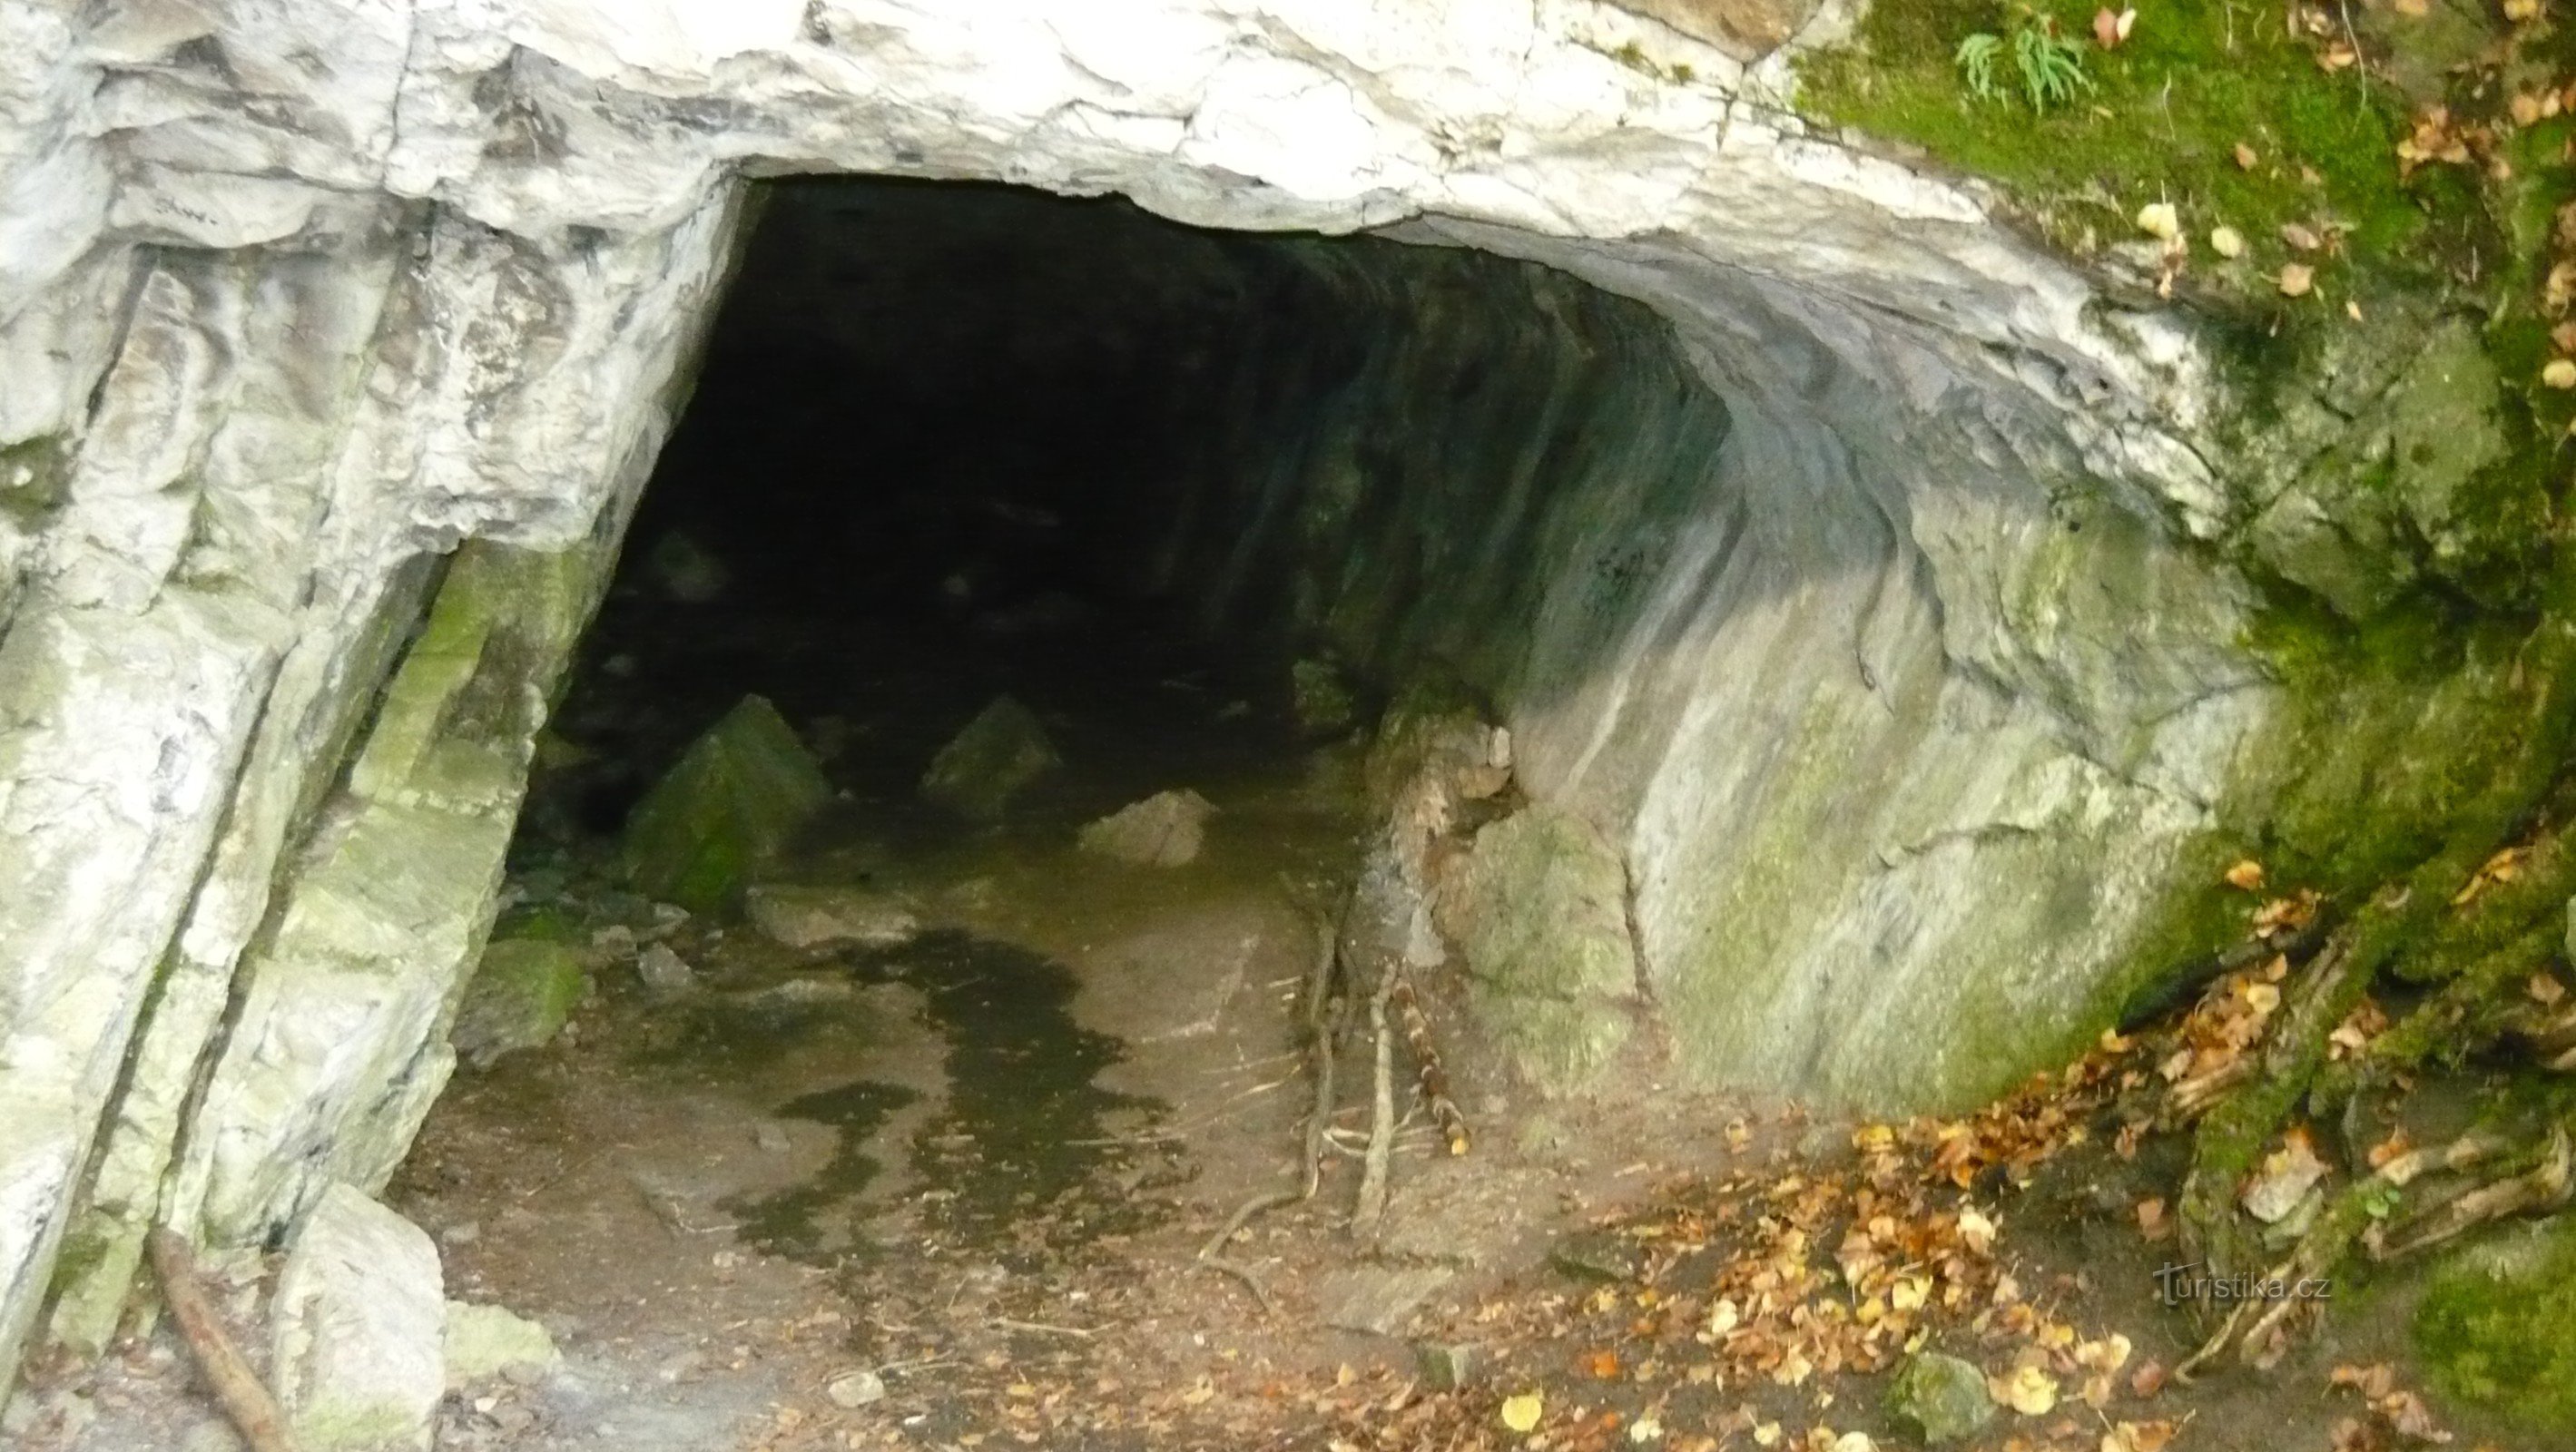 Koda Cave